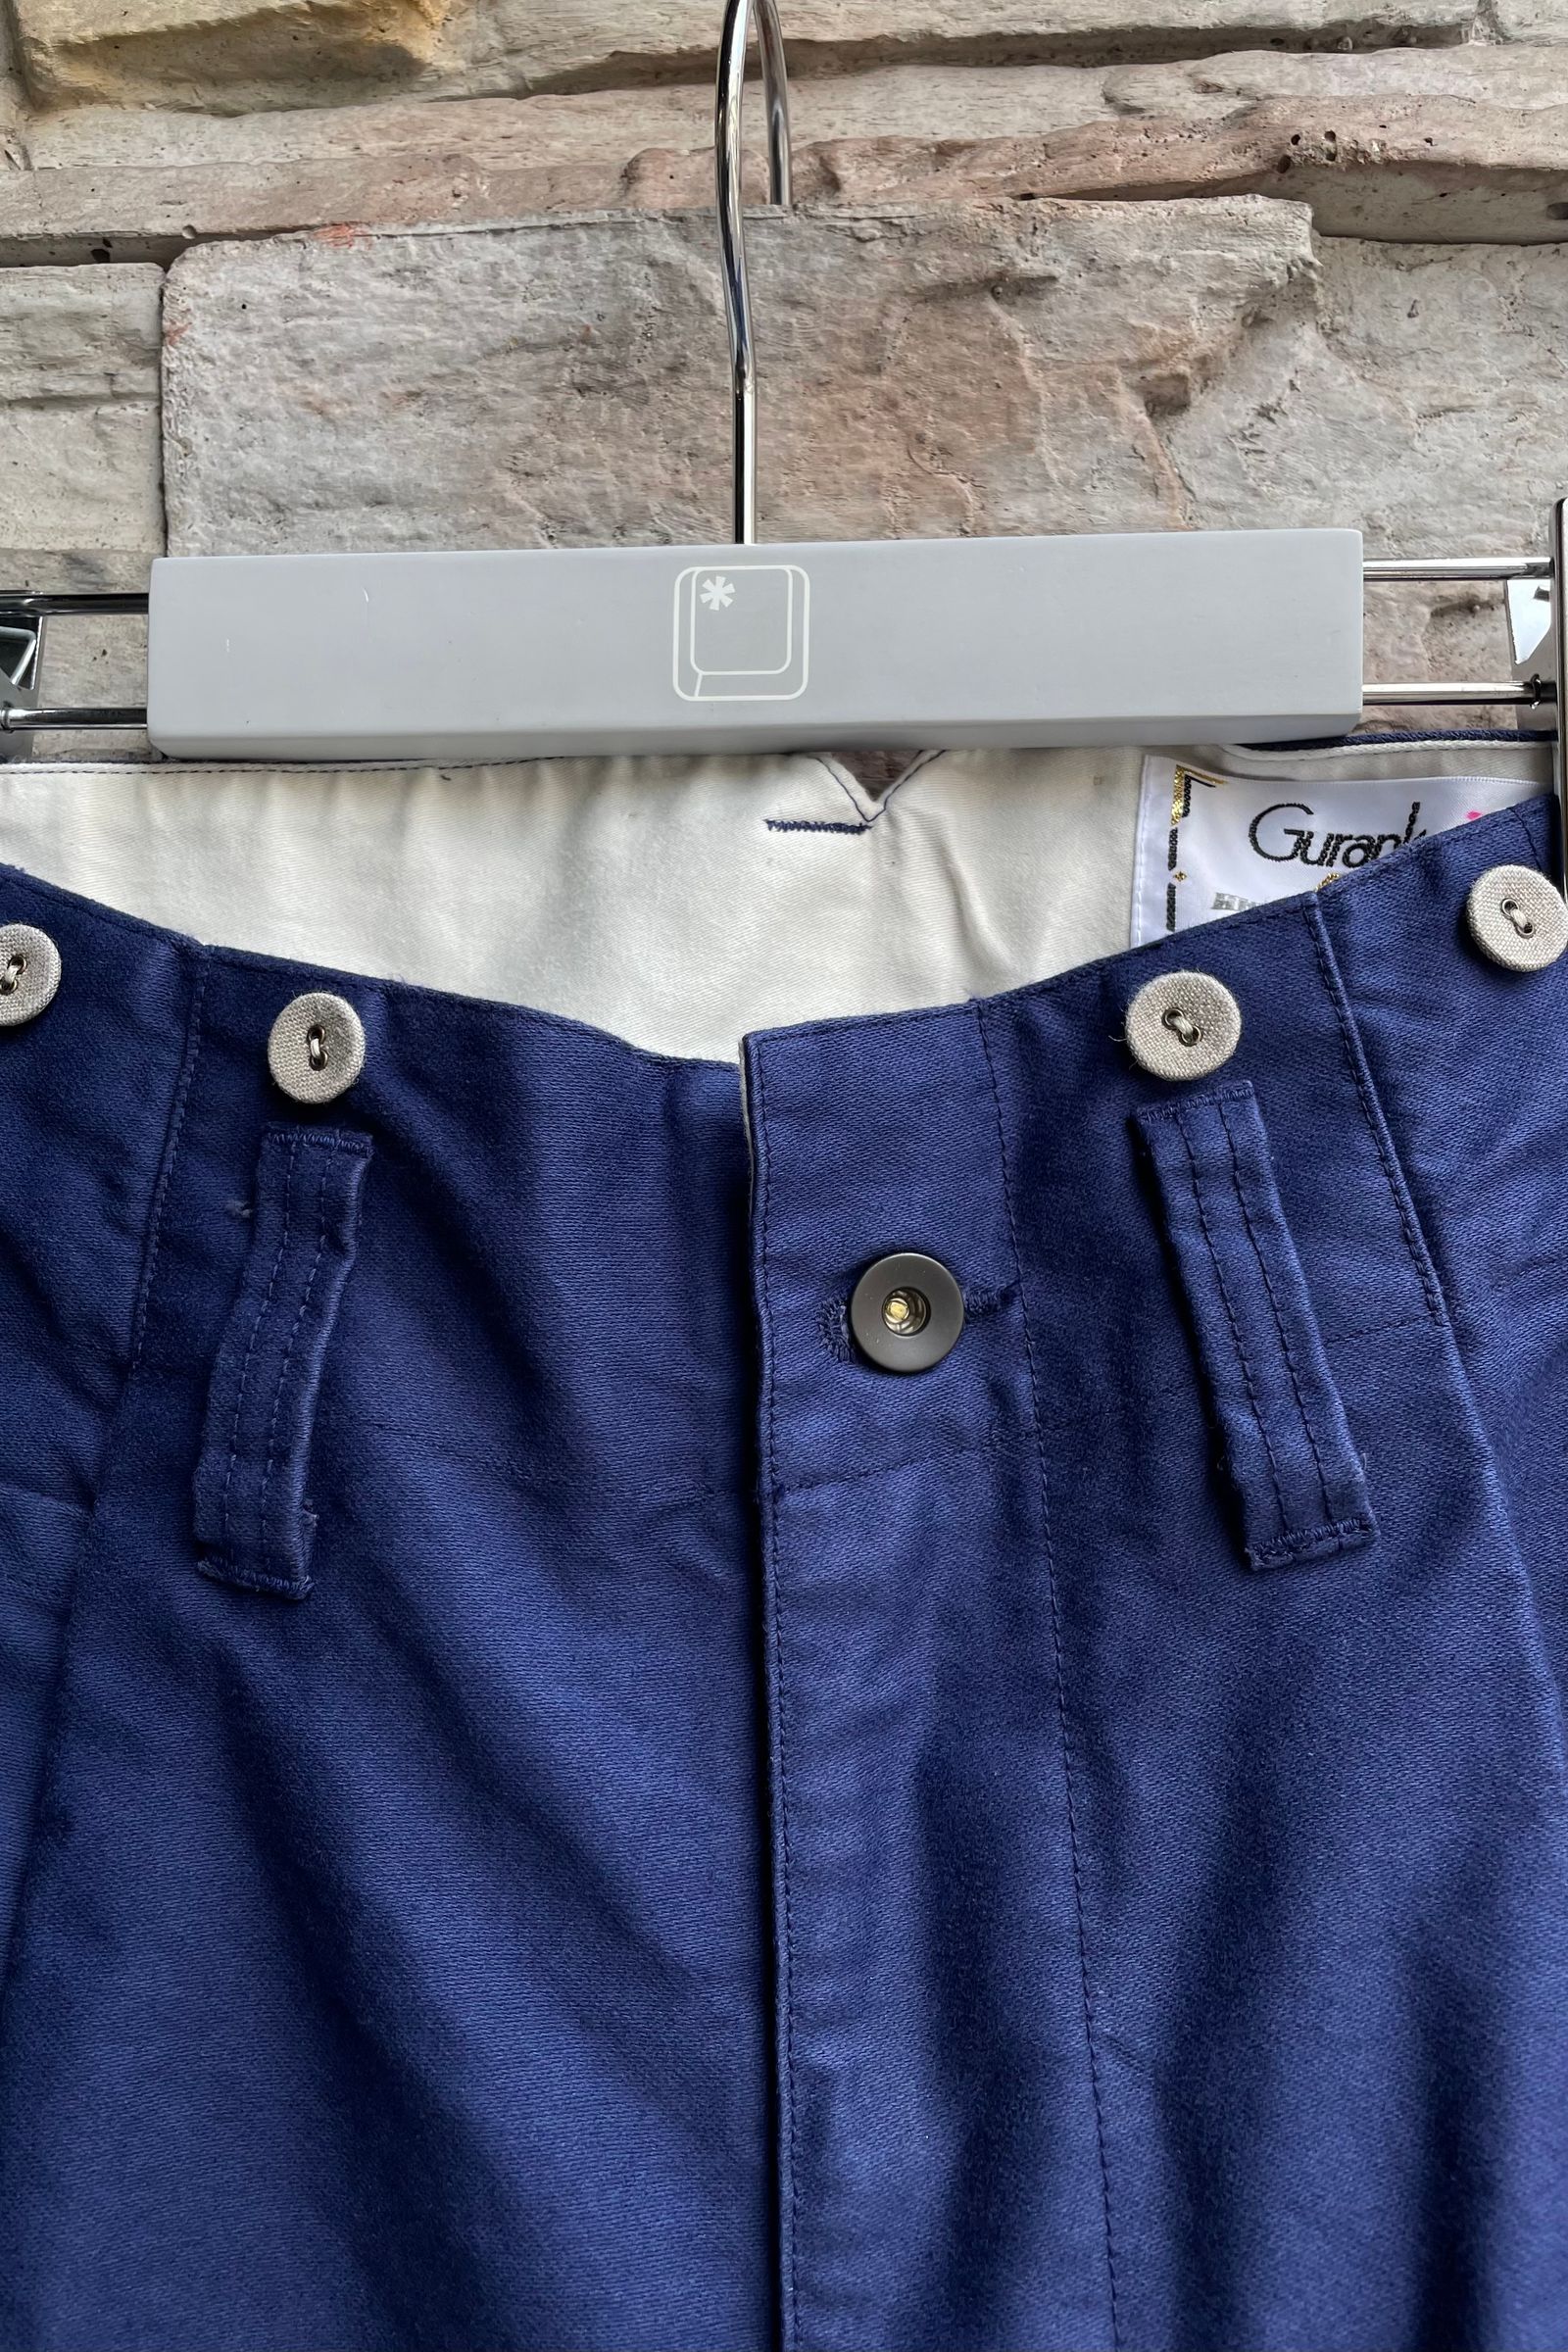 Gurank - Moleskin work trousers -blue- 23aw | asterisk